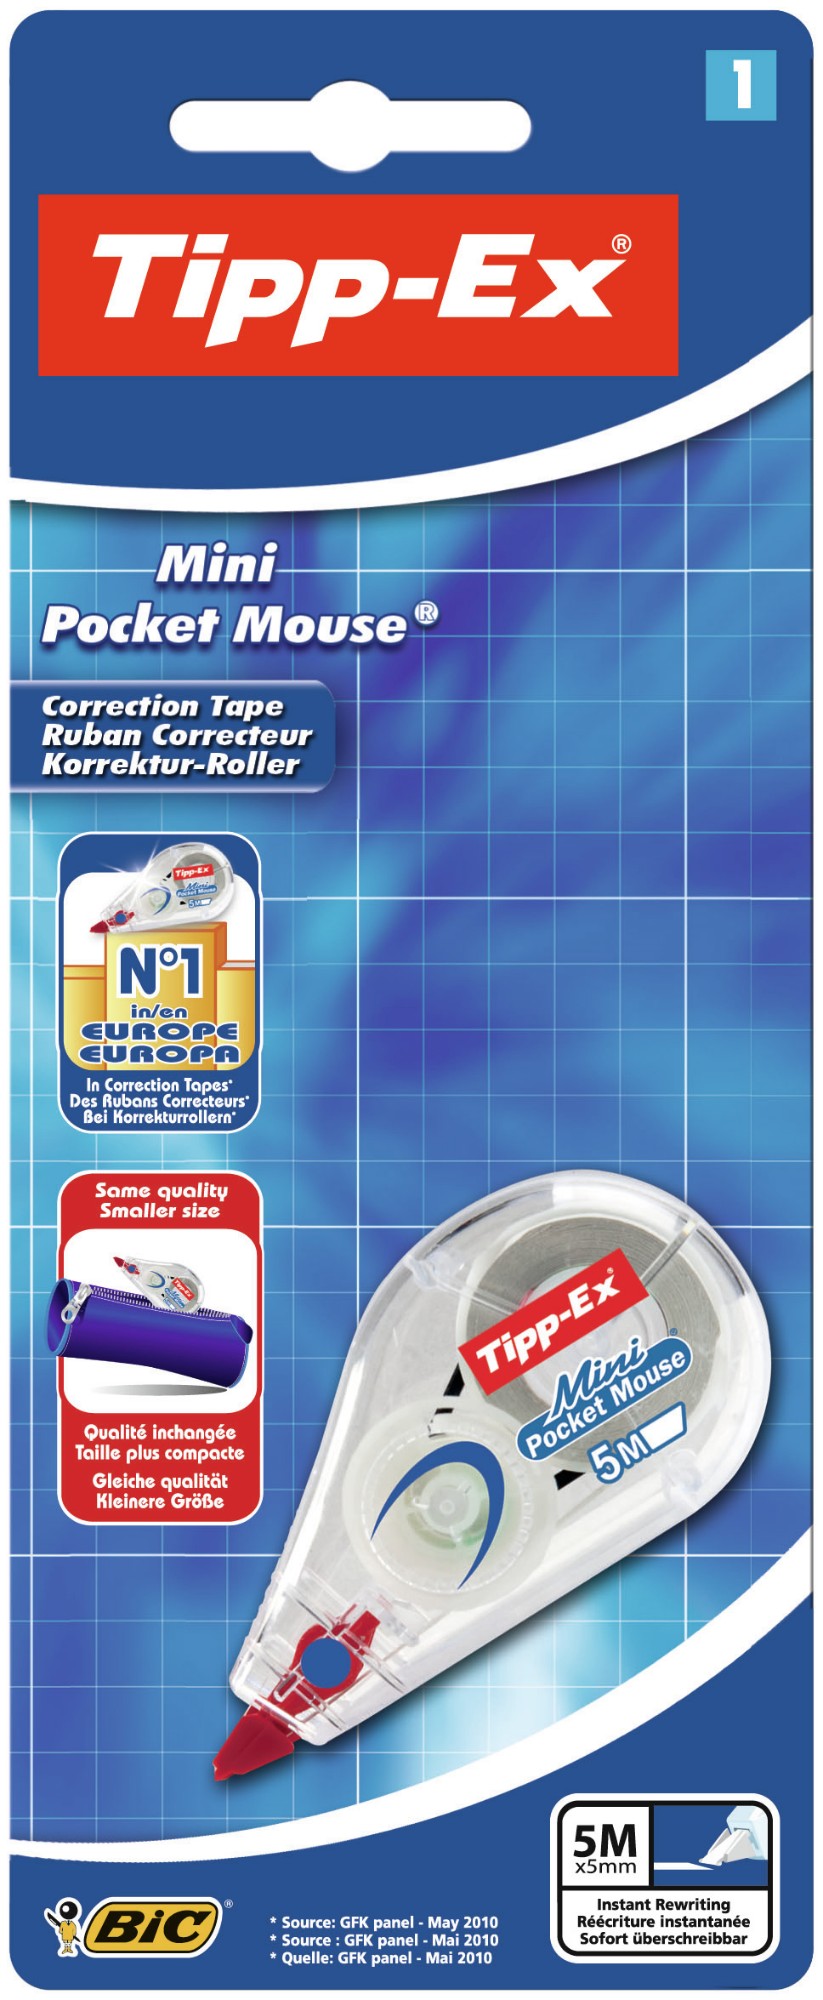 Corrector tipp-ex cinta tamaño mini pocket mouse. Medidas 4,2 mm x (18636)